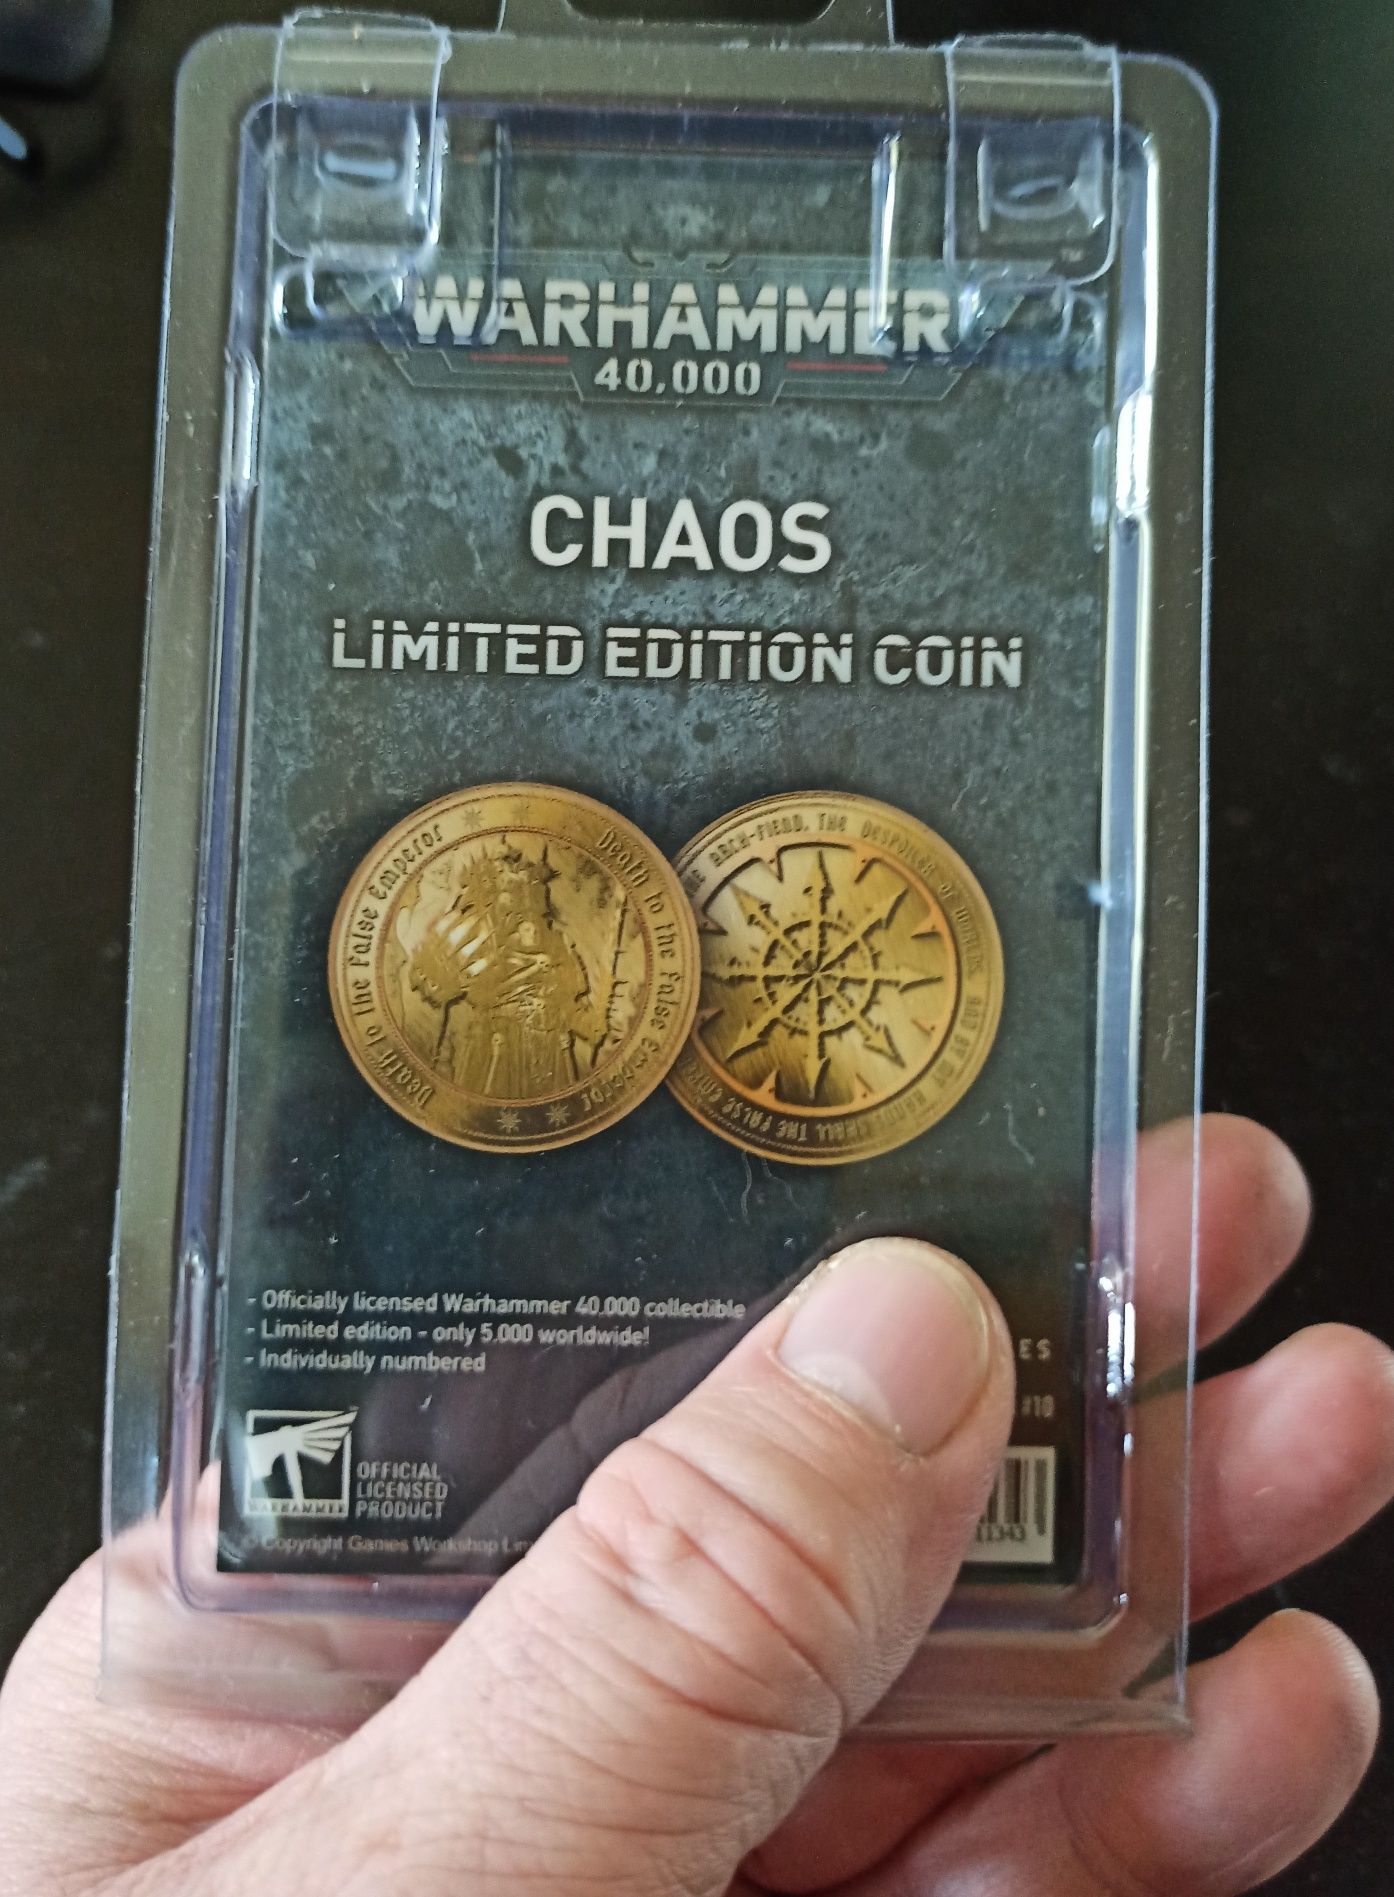 Warhammer 40k coin moneta, okolicznościowa